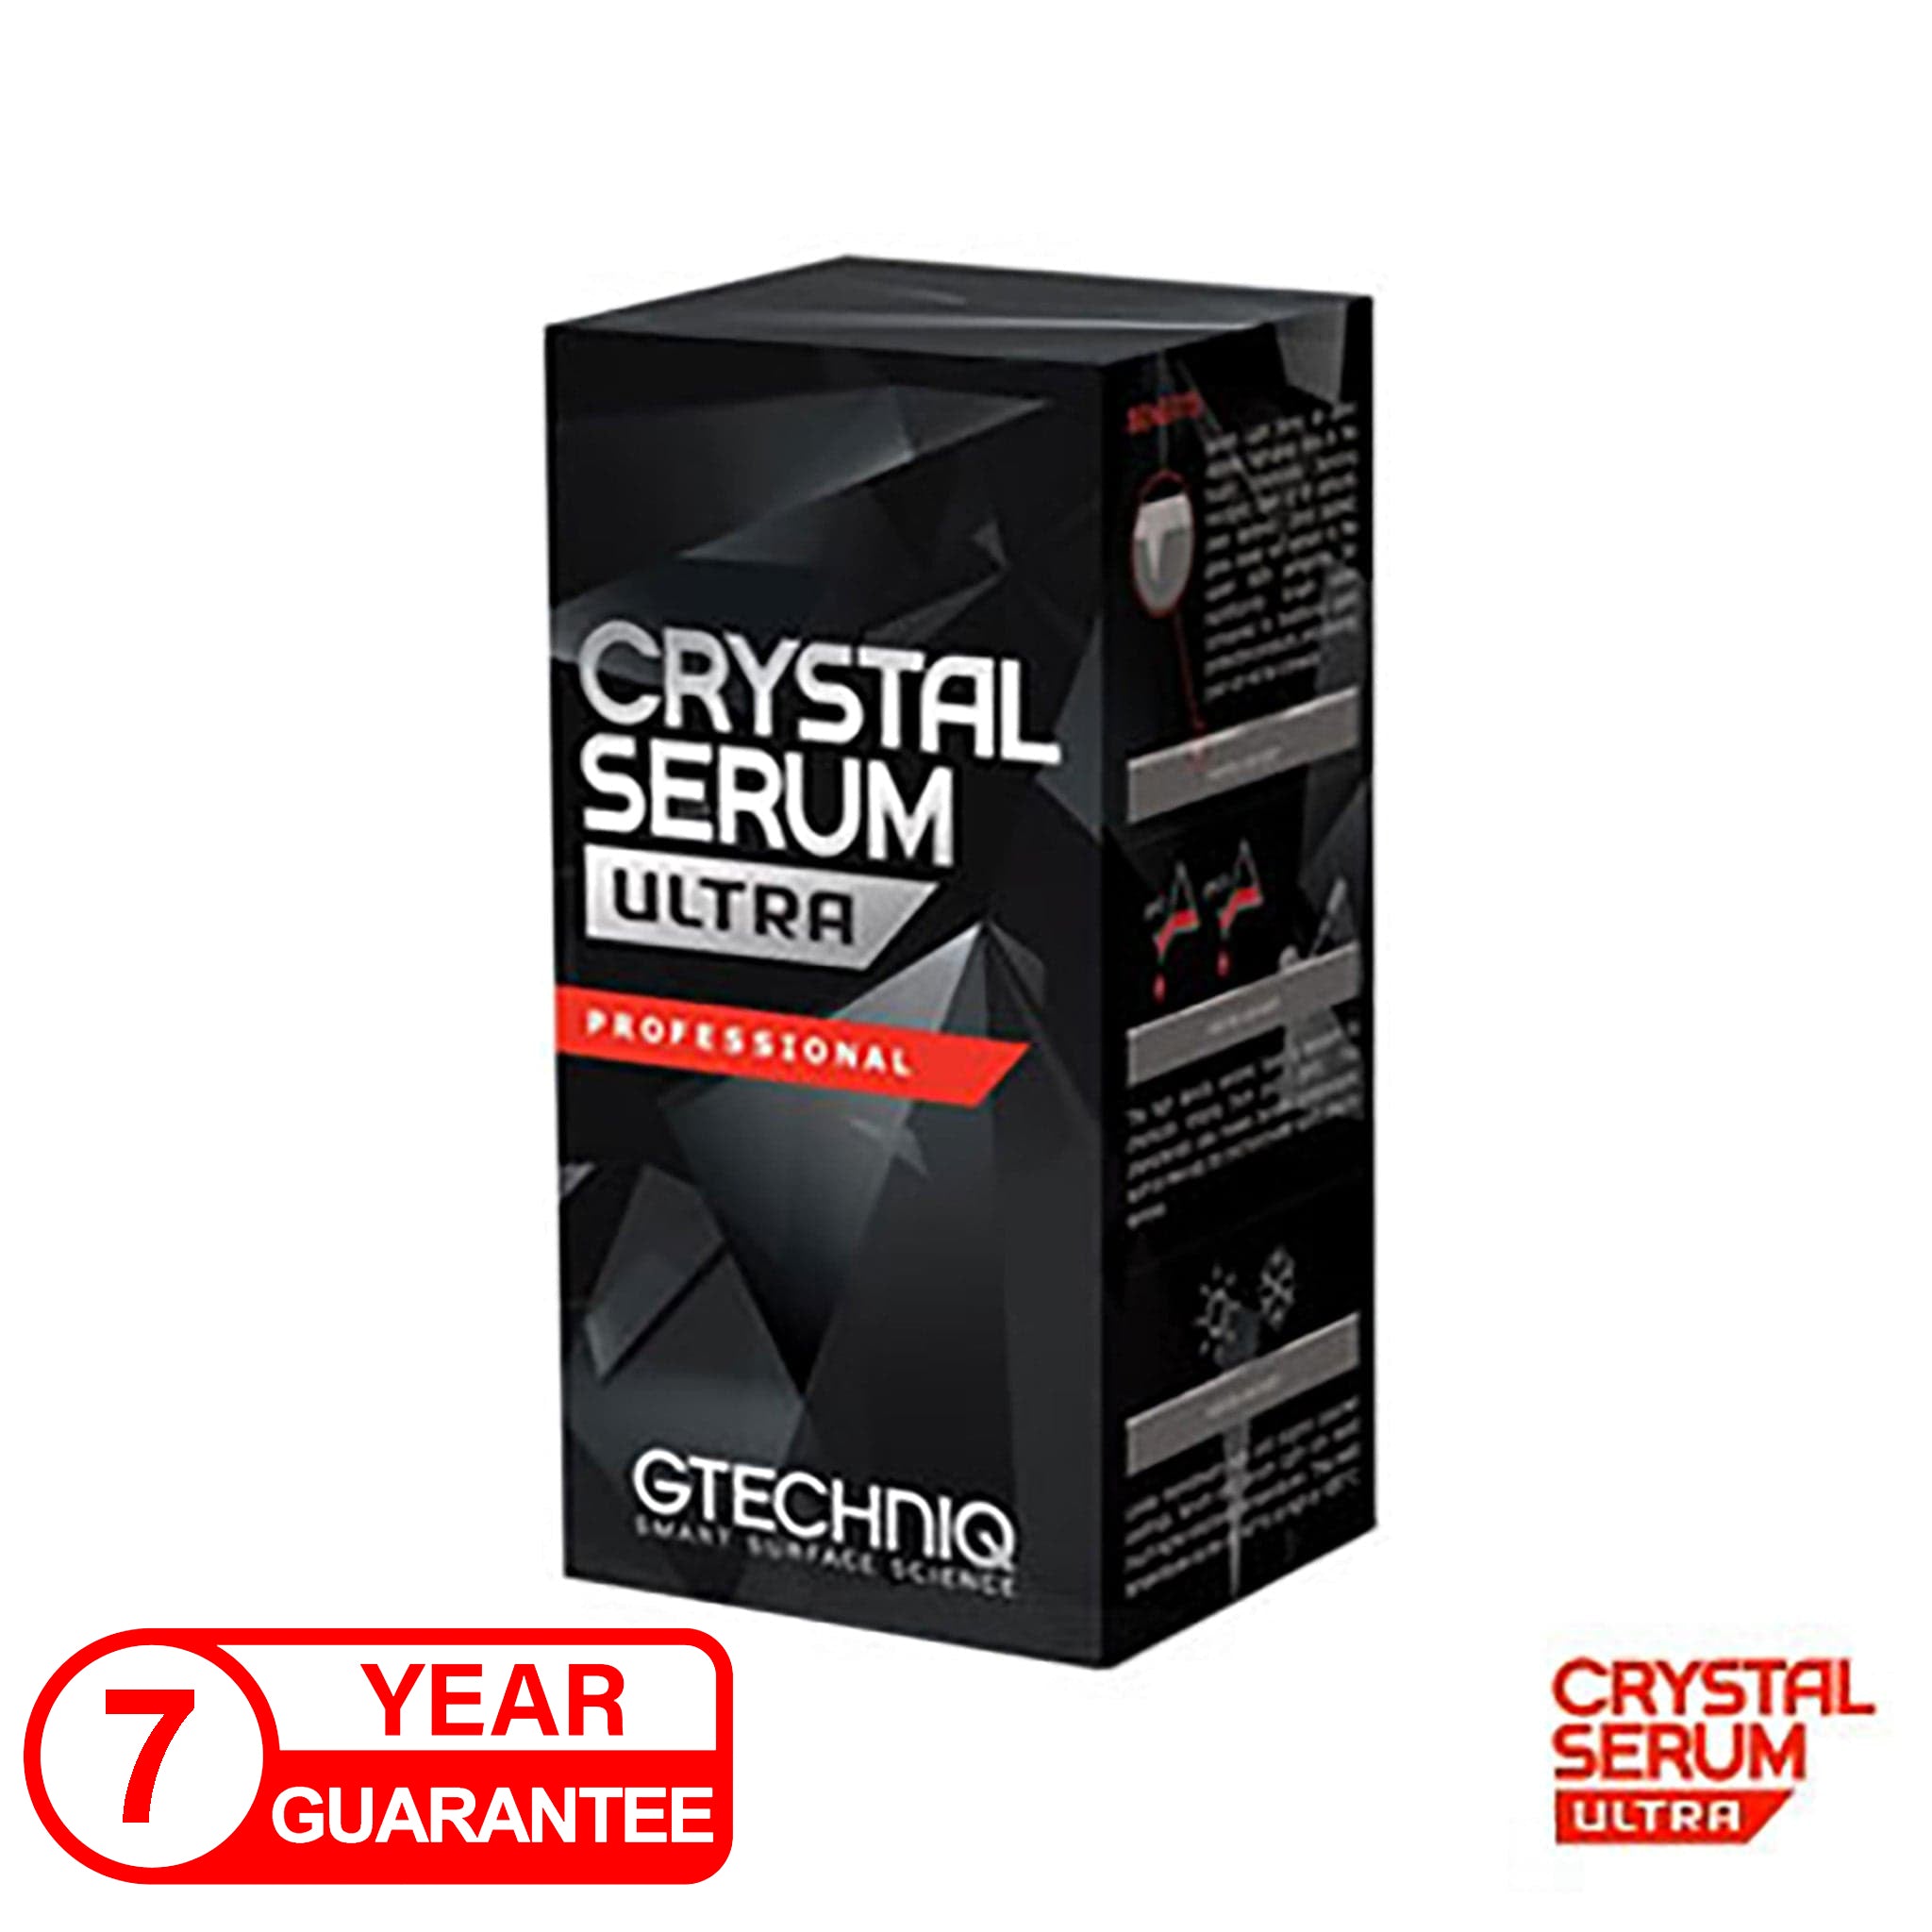 Gtechniq Crystal Serum Light Protects Tesla P90D